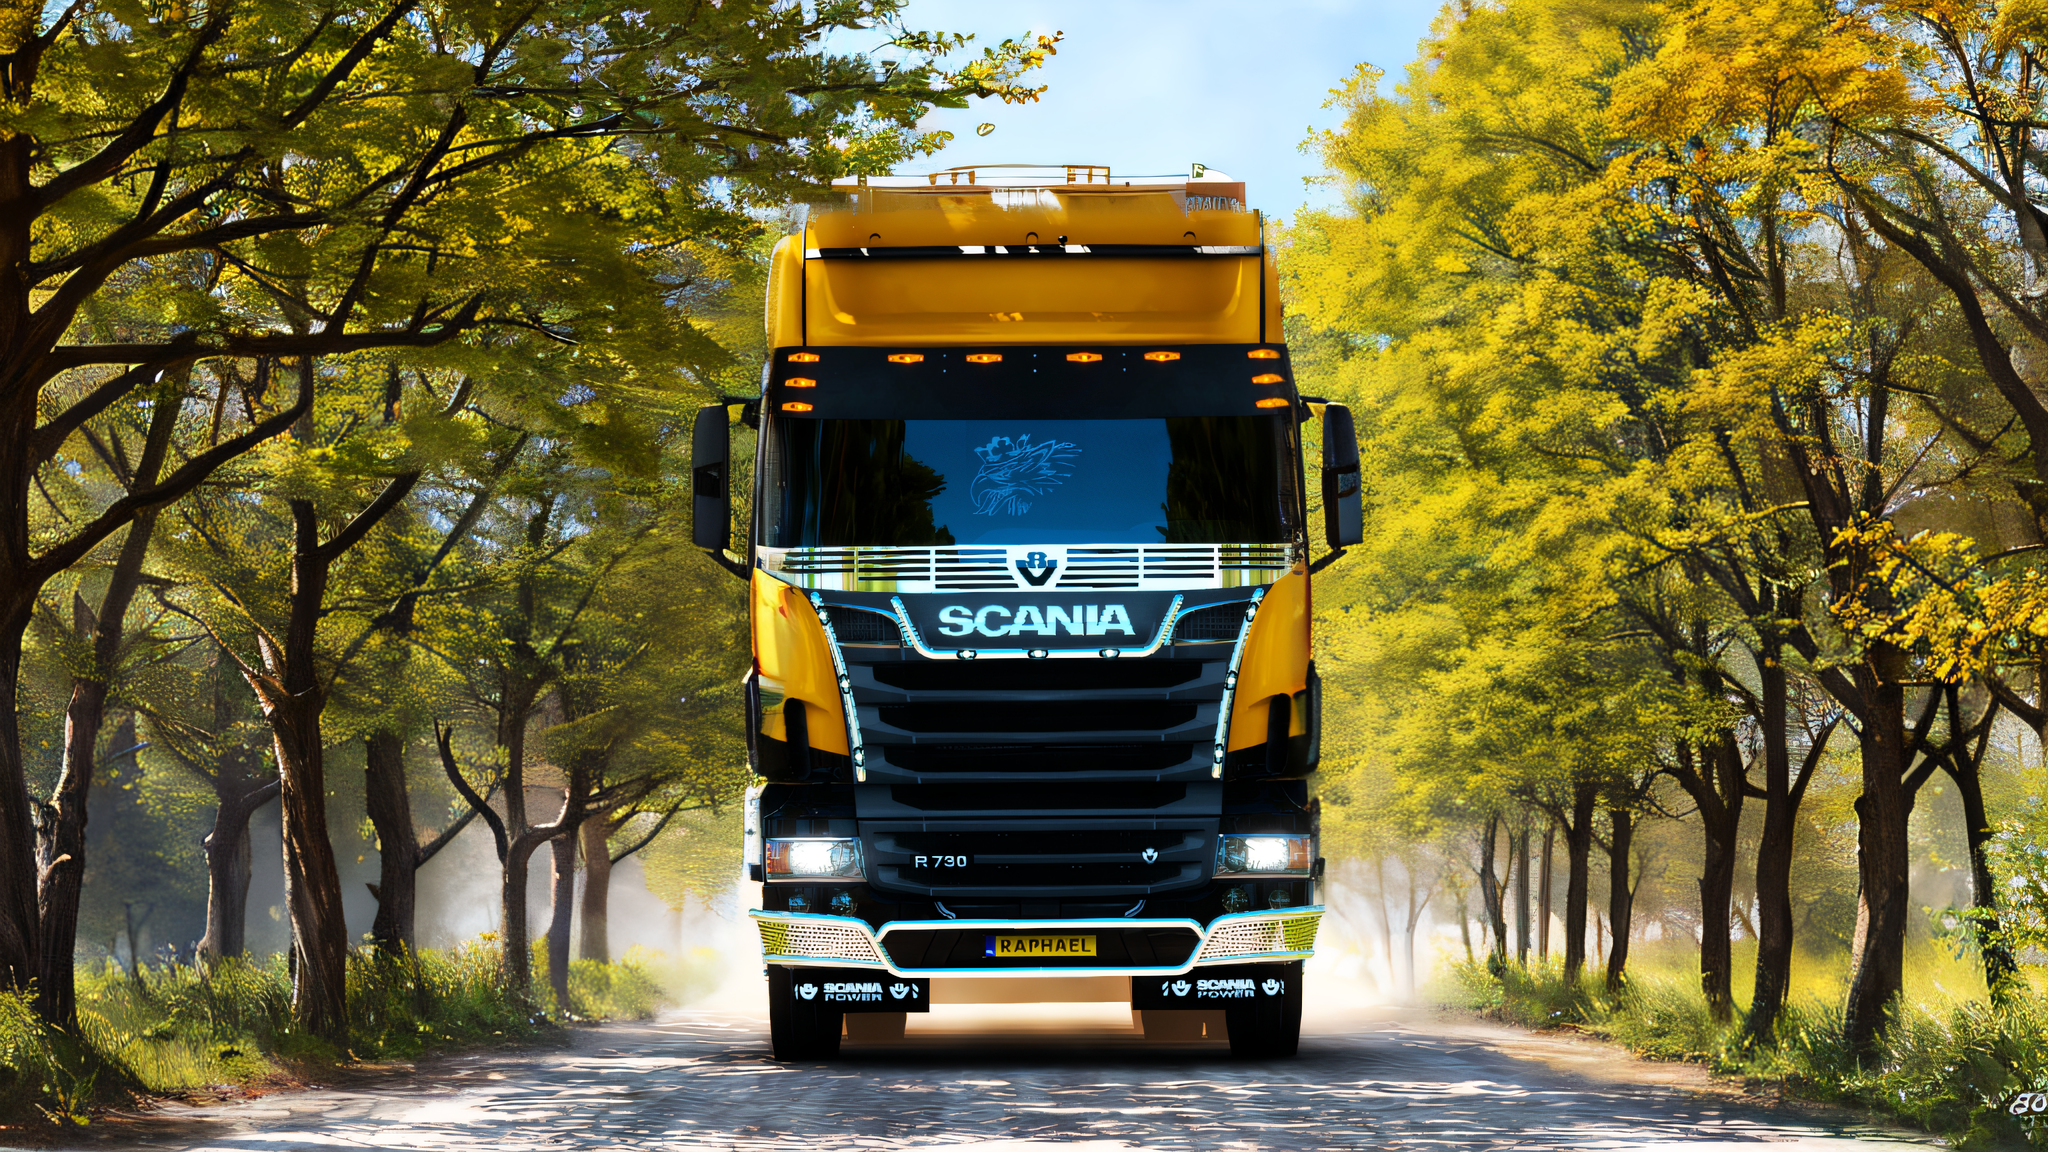 General 2048x1152 VTC FBTC frontal view vehicle trees road headlights video games truck Swedish trucks